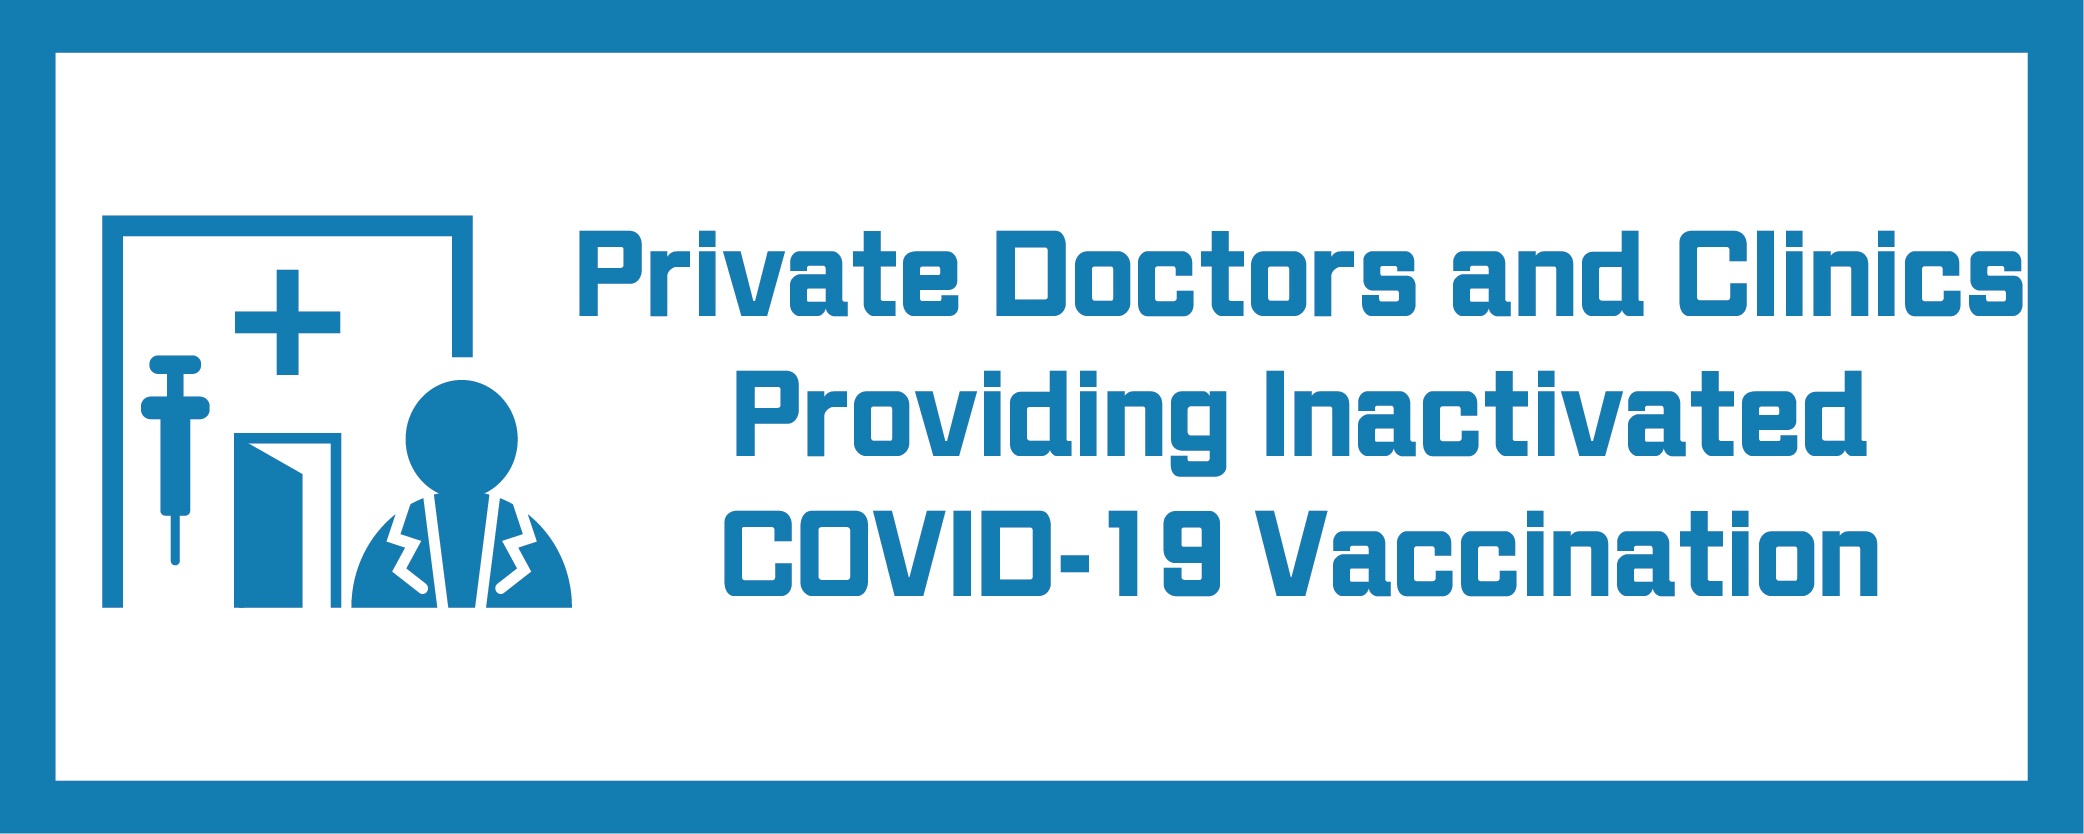 Private Doctors and Clinics Providing Sinovac Vaccination